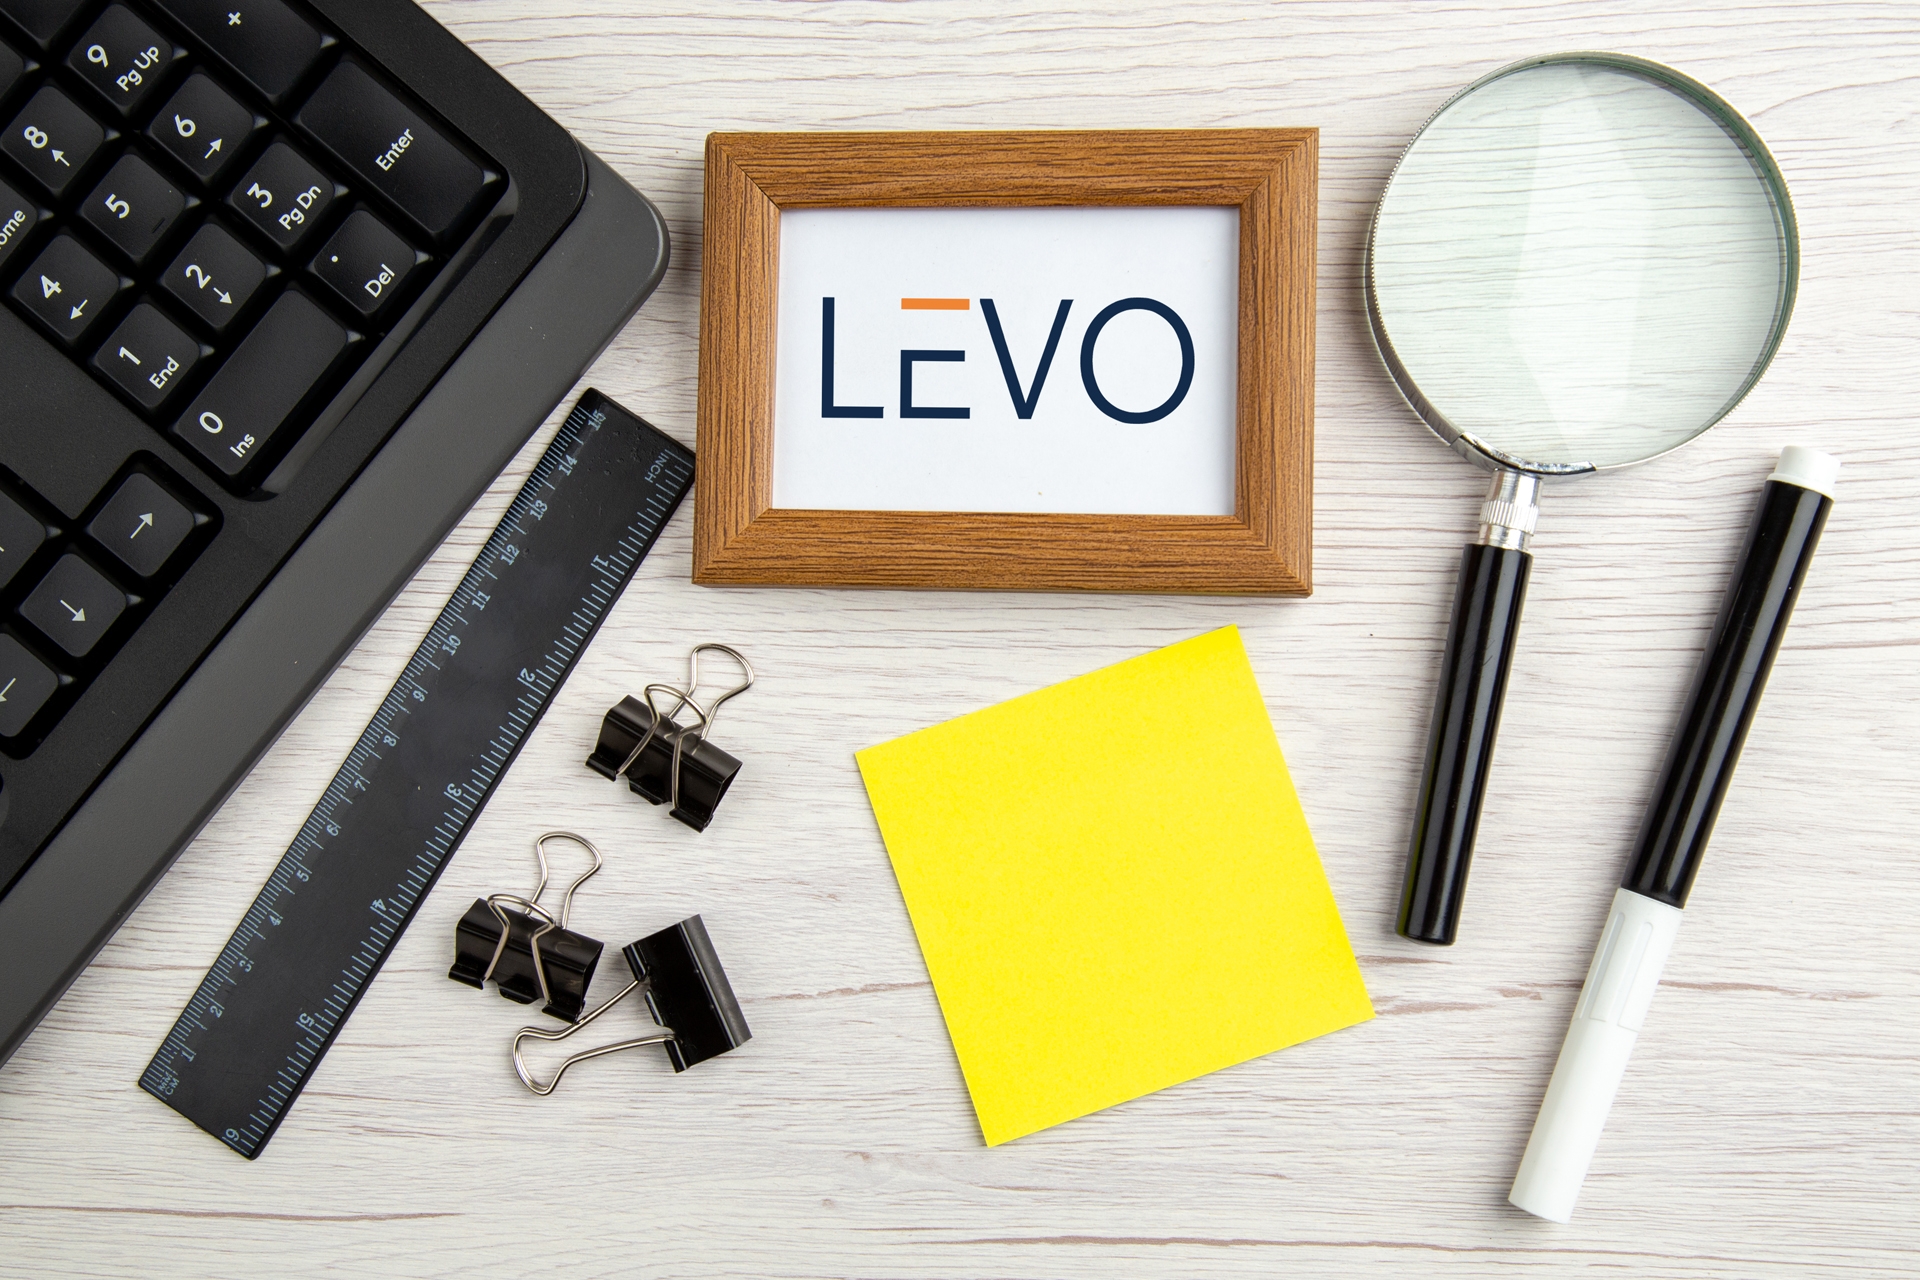 levo-saves-time-on-integration-tests-improves-developer-efficiency-with-signadot